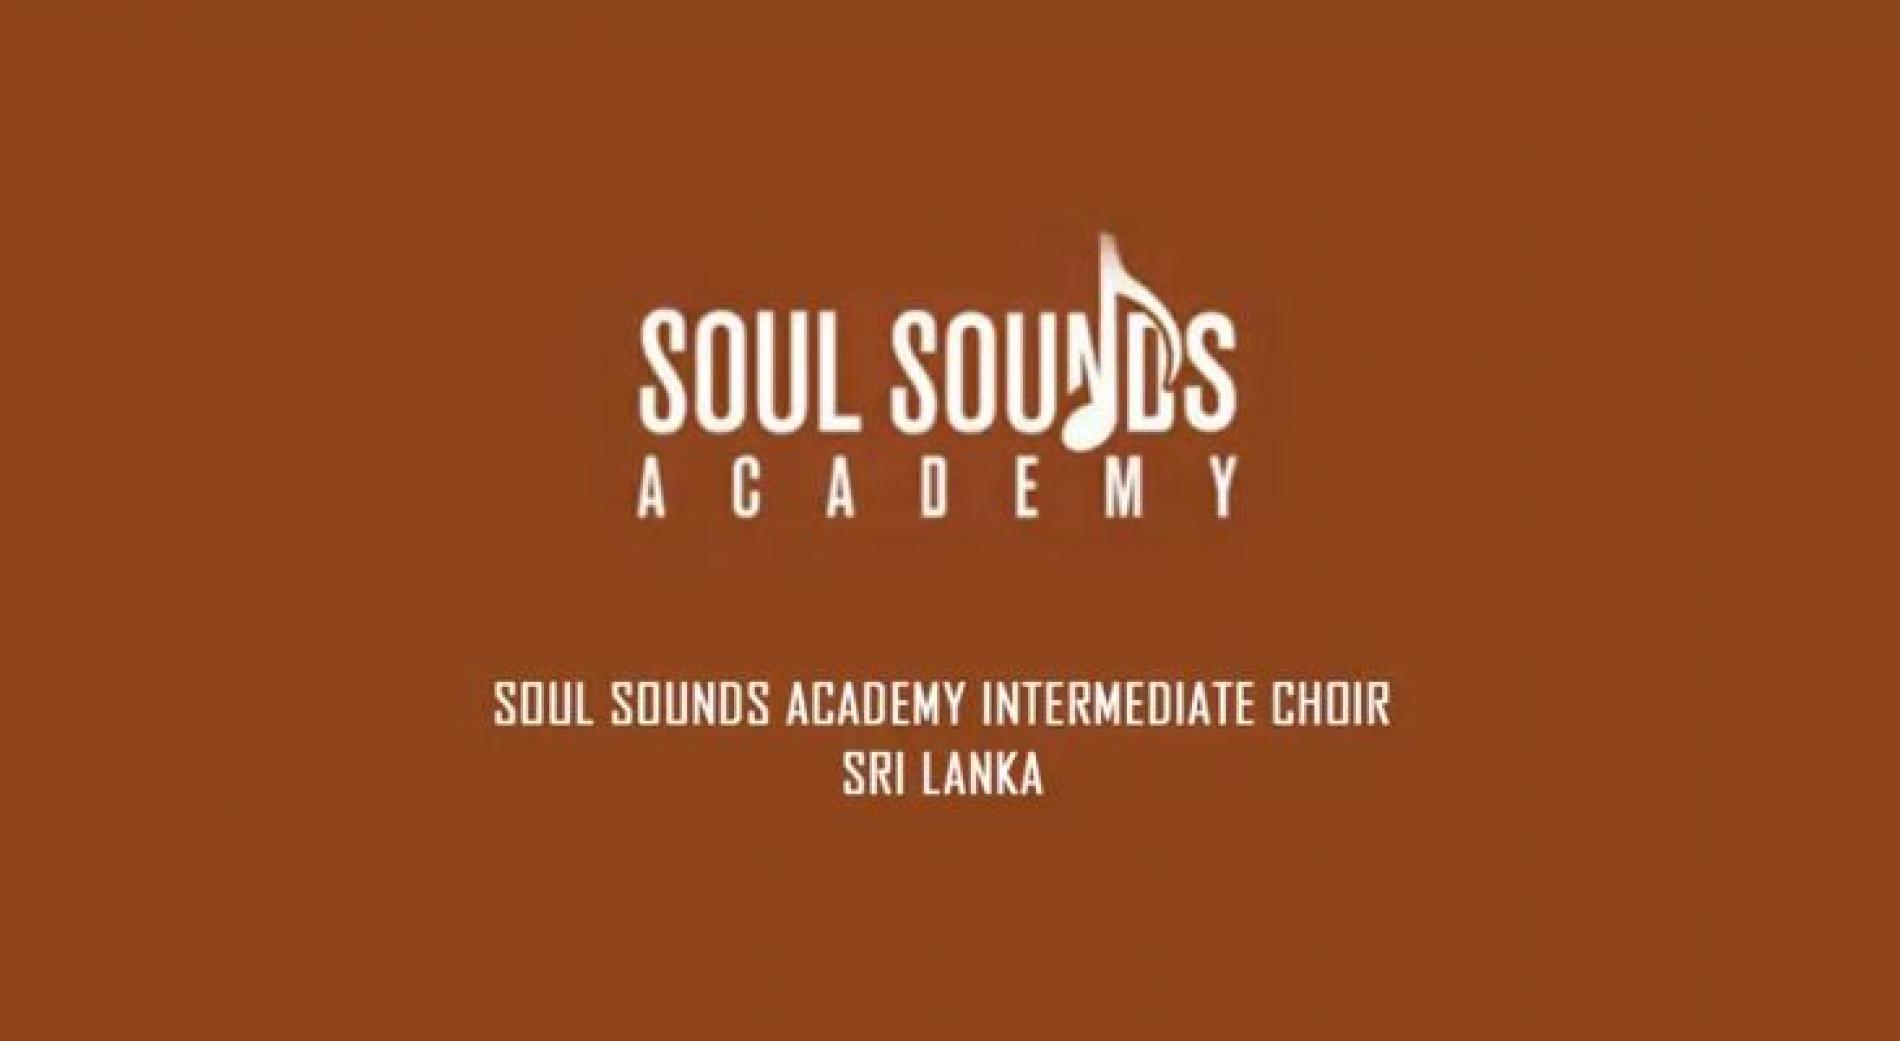 New Music : Soul Sounds Academy Intermediate Choir (Sri Lanka) – “Ai Kale Adare”